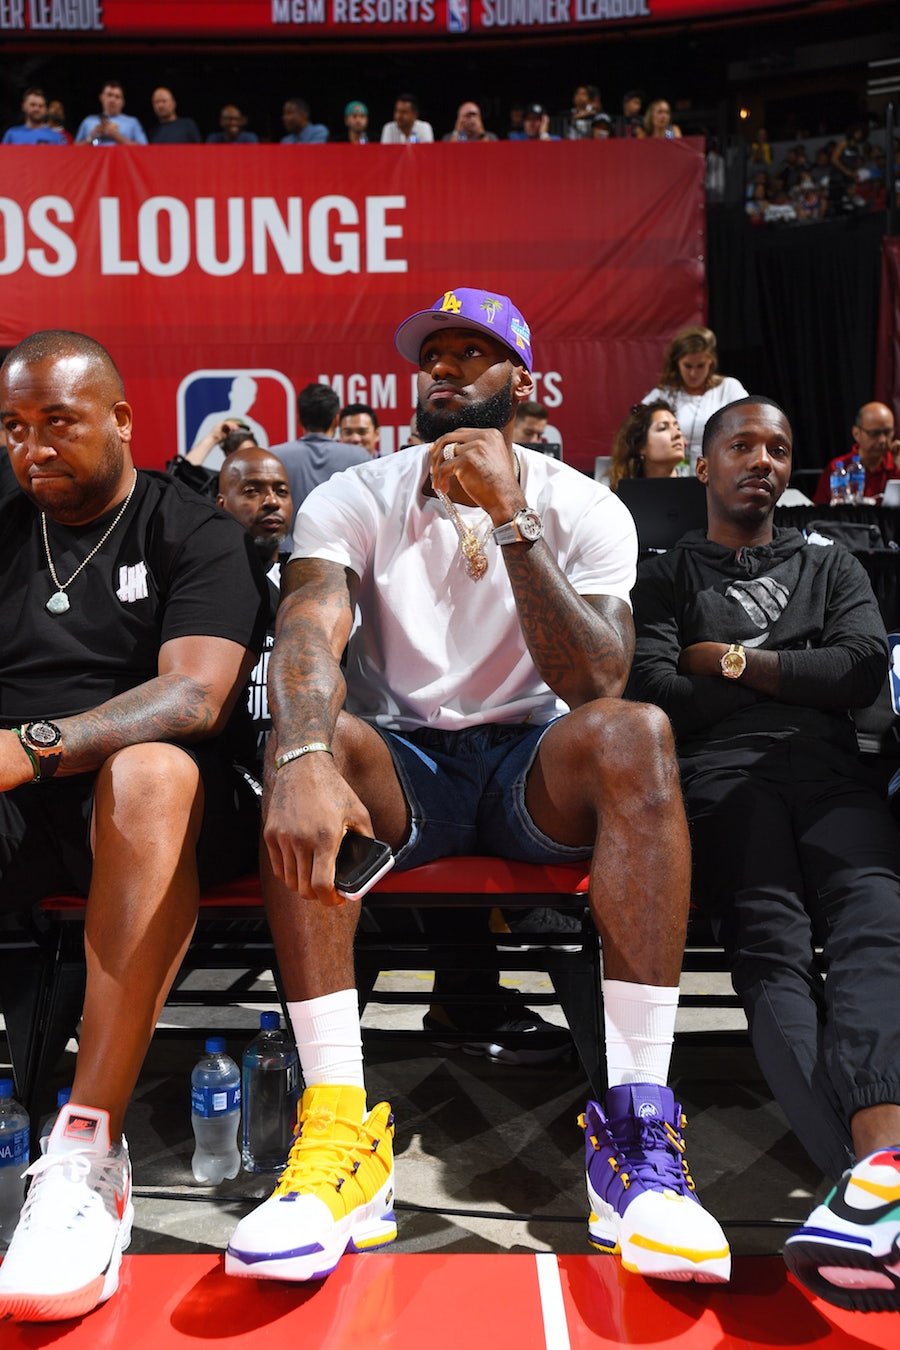 Nike LeBron 3 Lakers Release Date Info